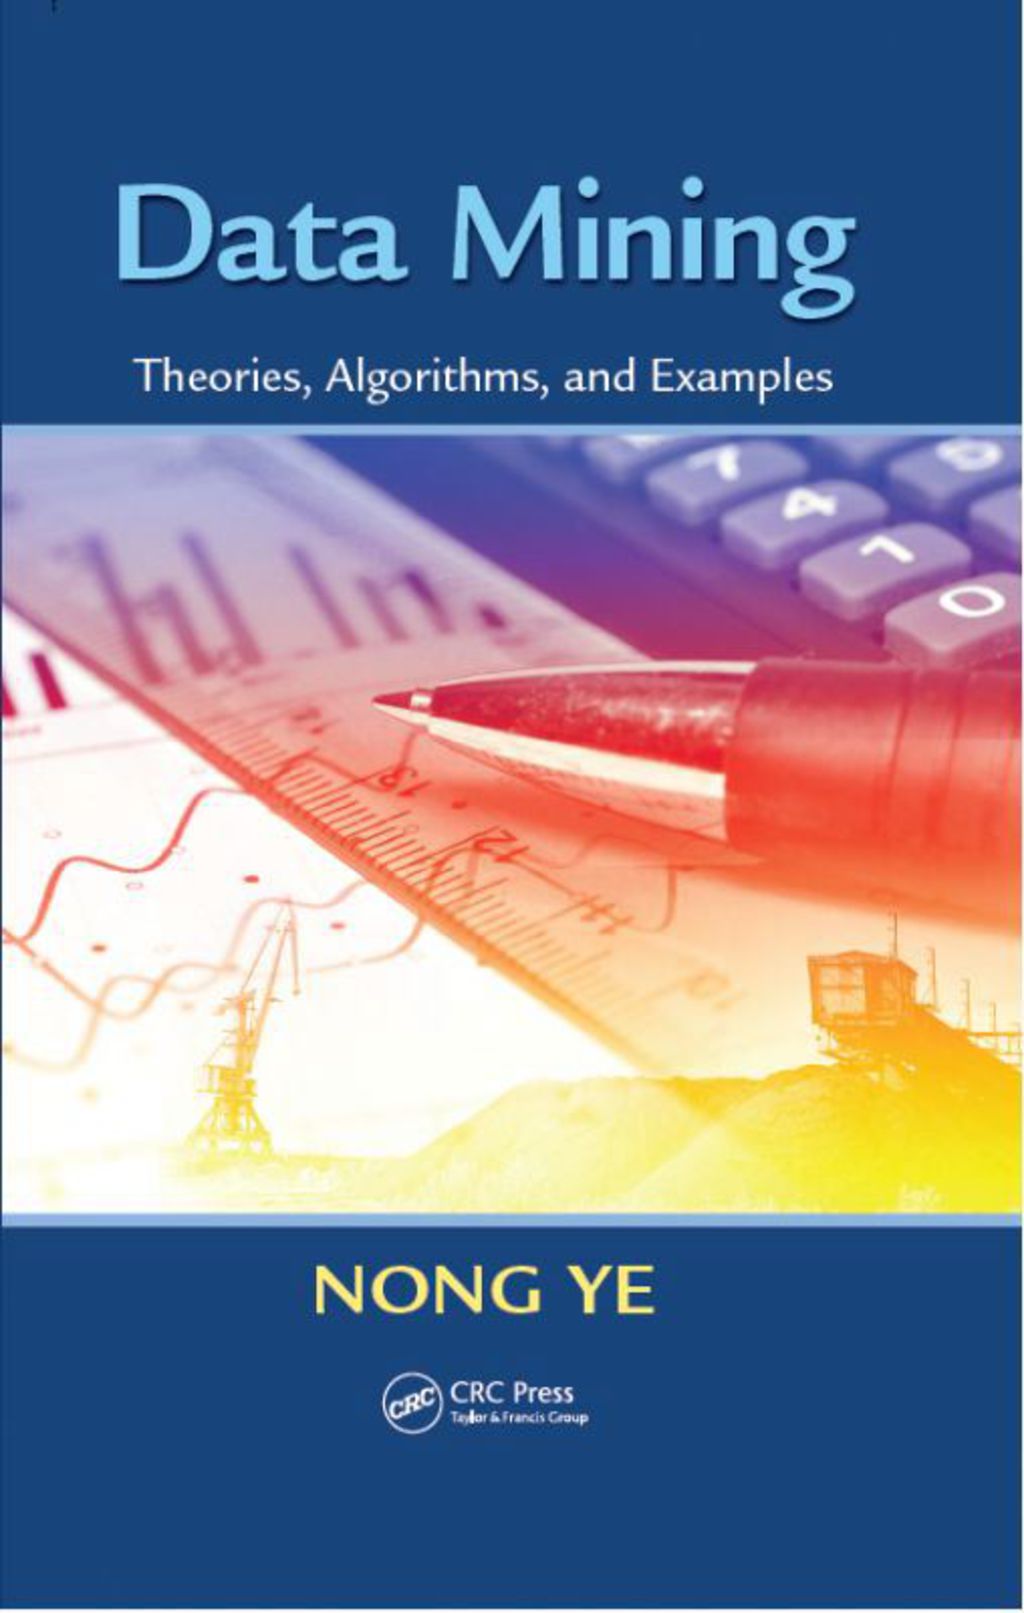 Data Mining (eBook) - Nong Ye